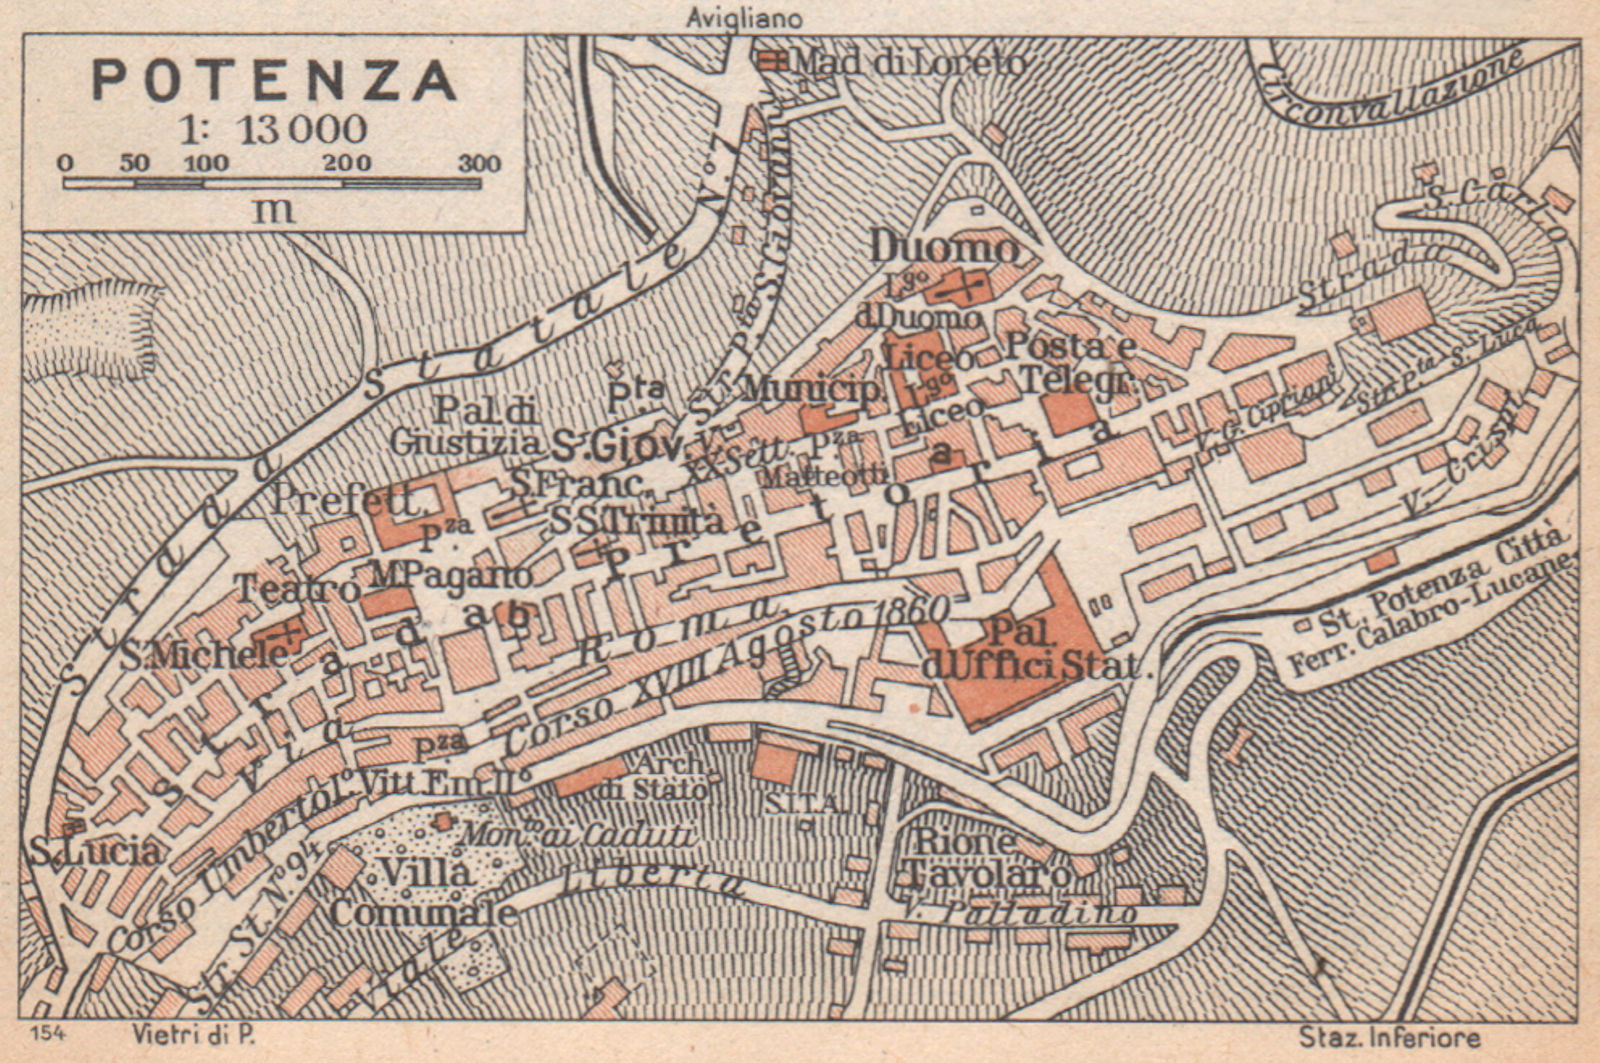 Associate Product POTENZA vintage town city pianta della città. Italy 1958 old vintage map chart